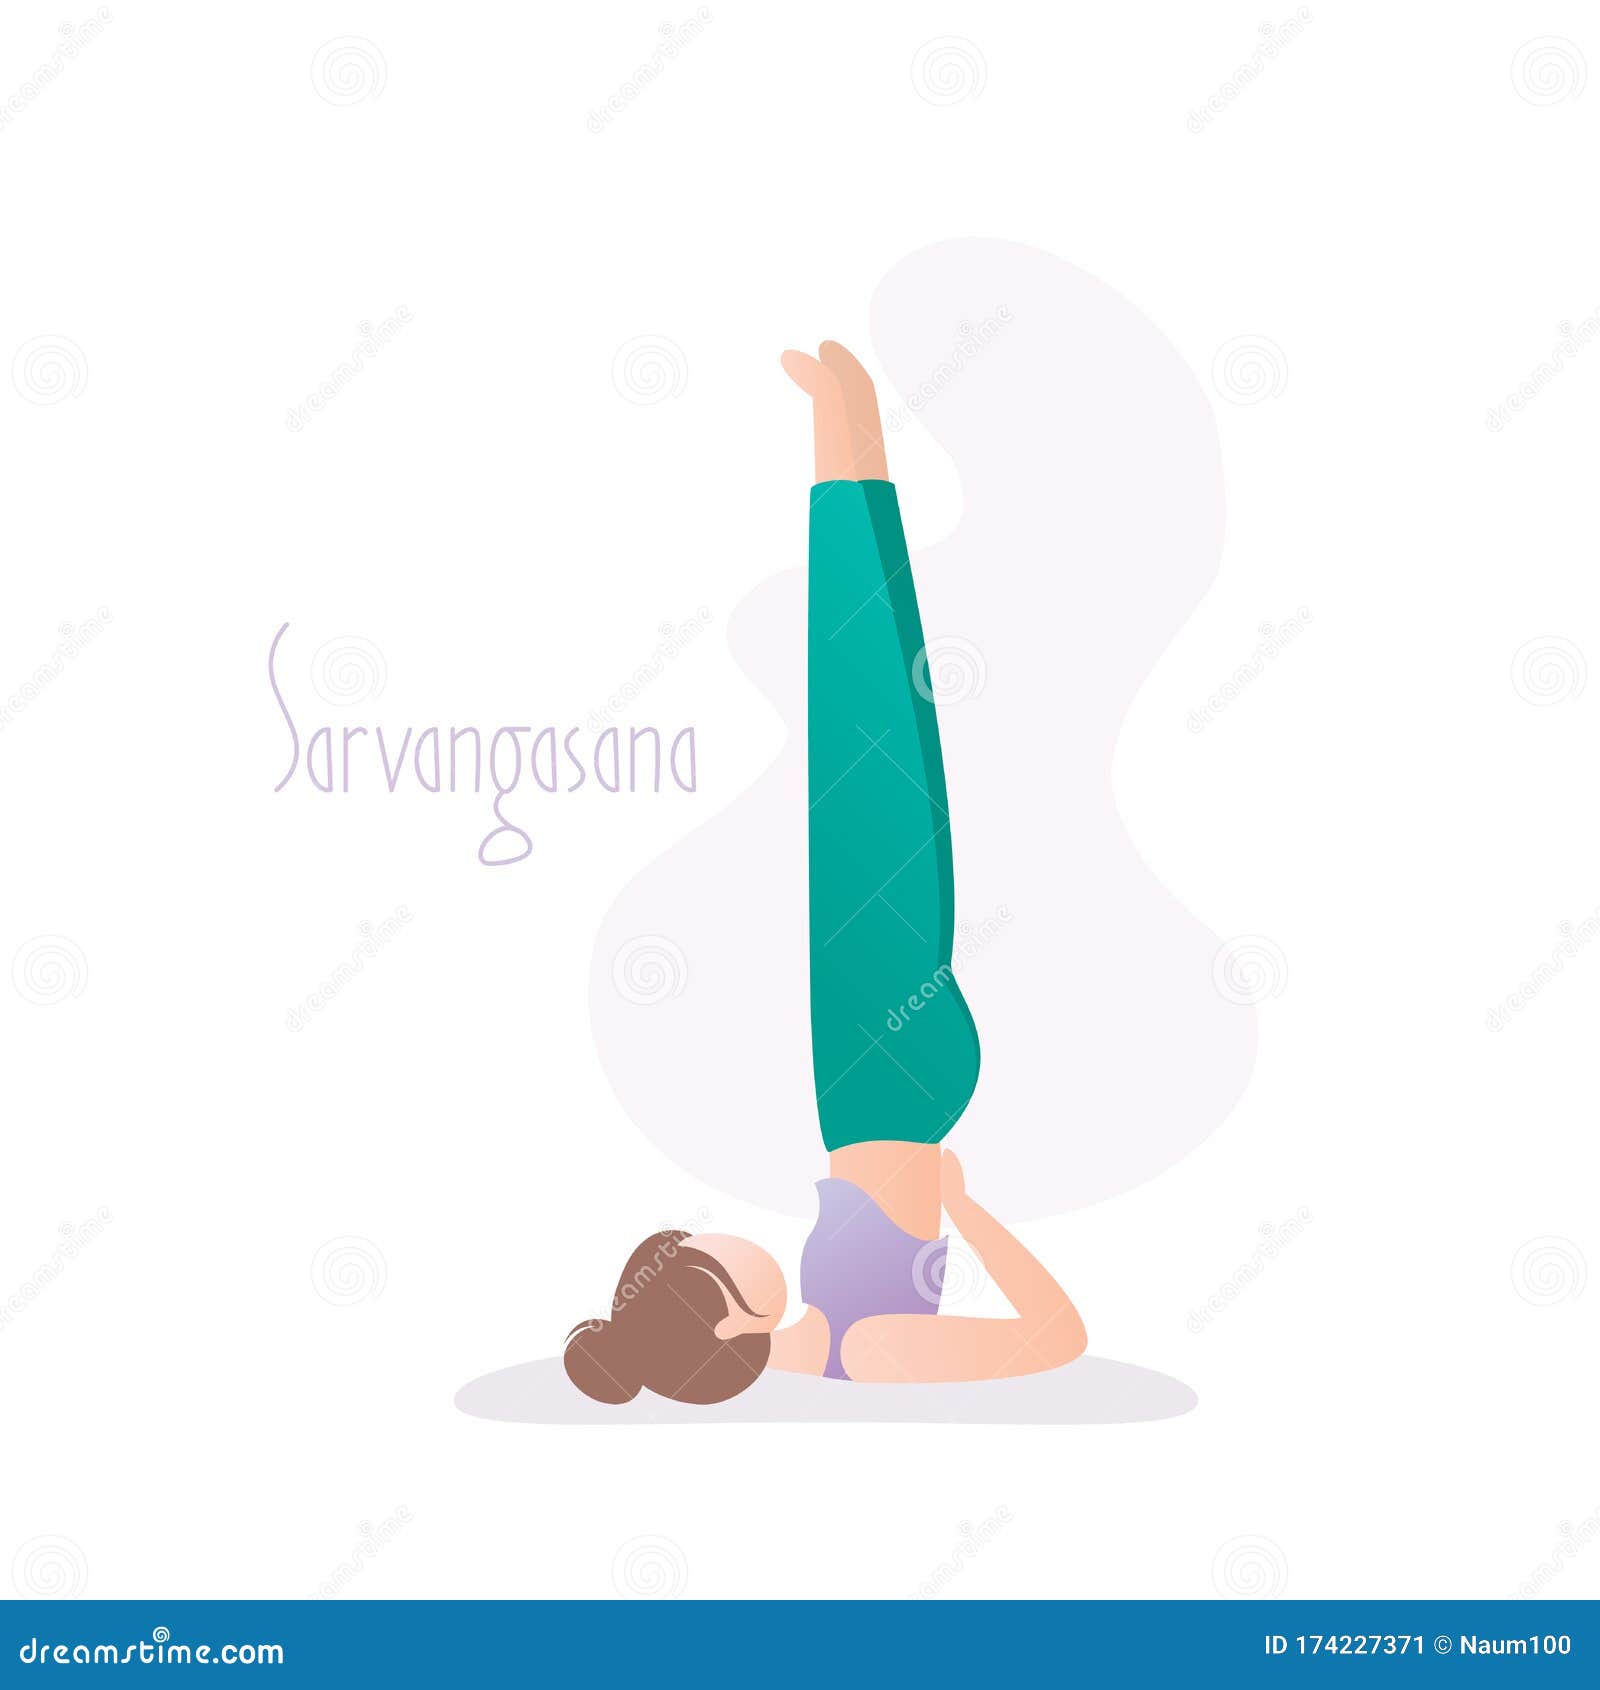 Fitness Inspiration Malaika Arora Will Teach You The Halasana And Sarvangasana  Yoga Poses